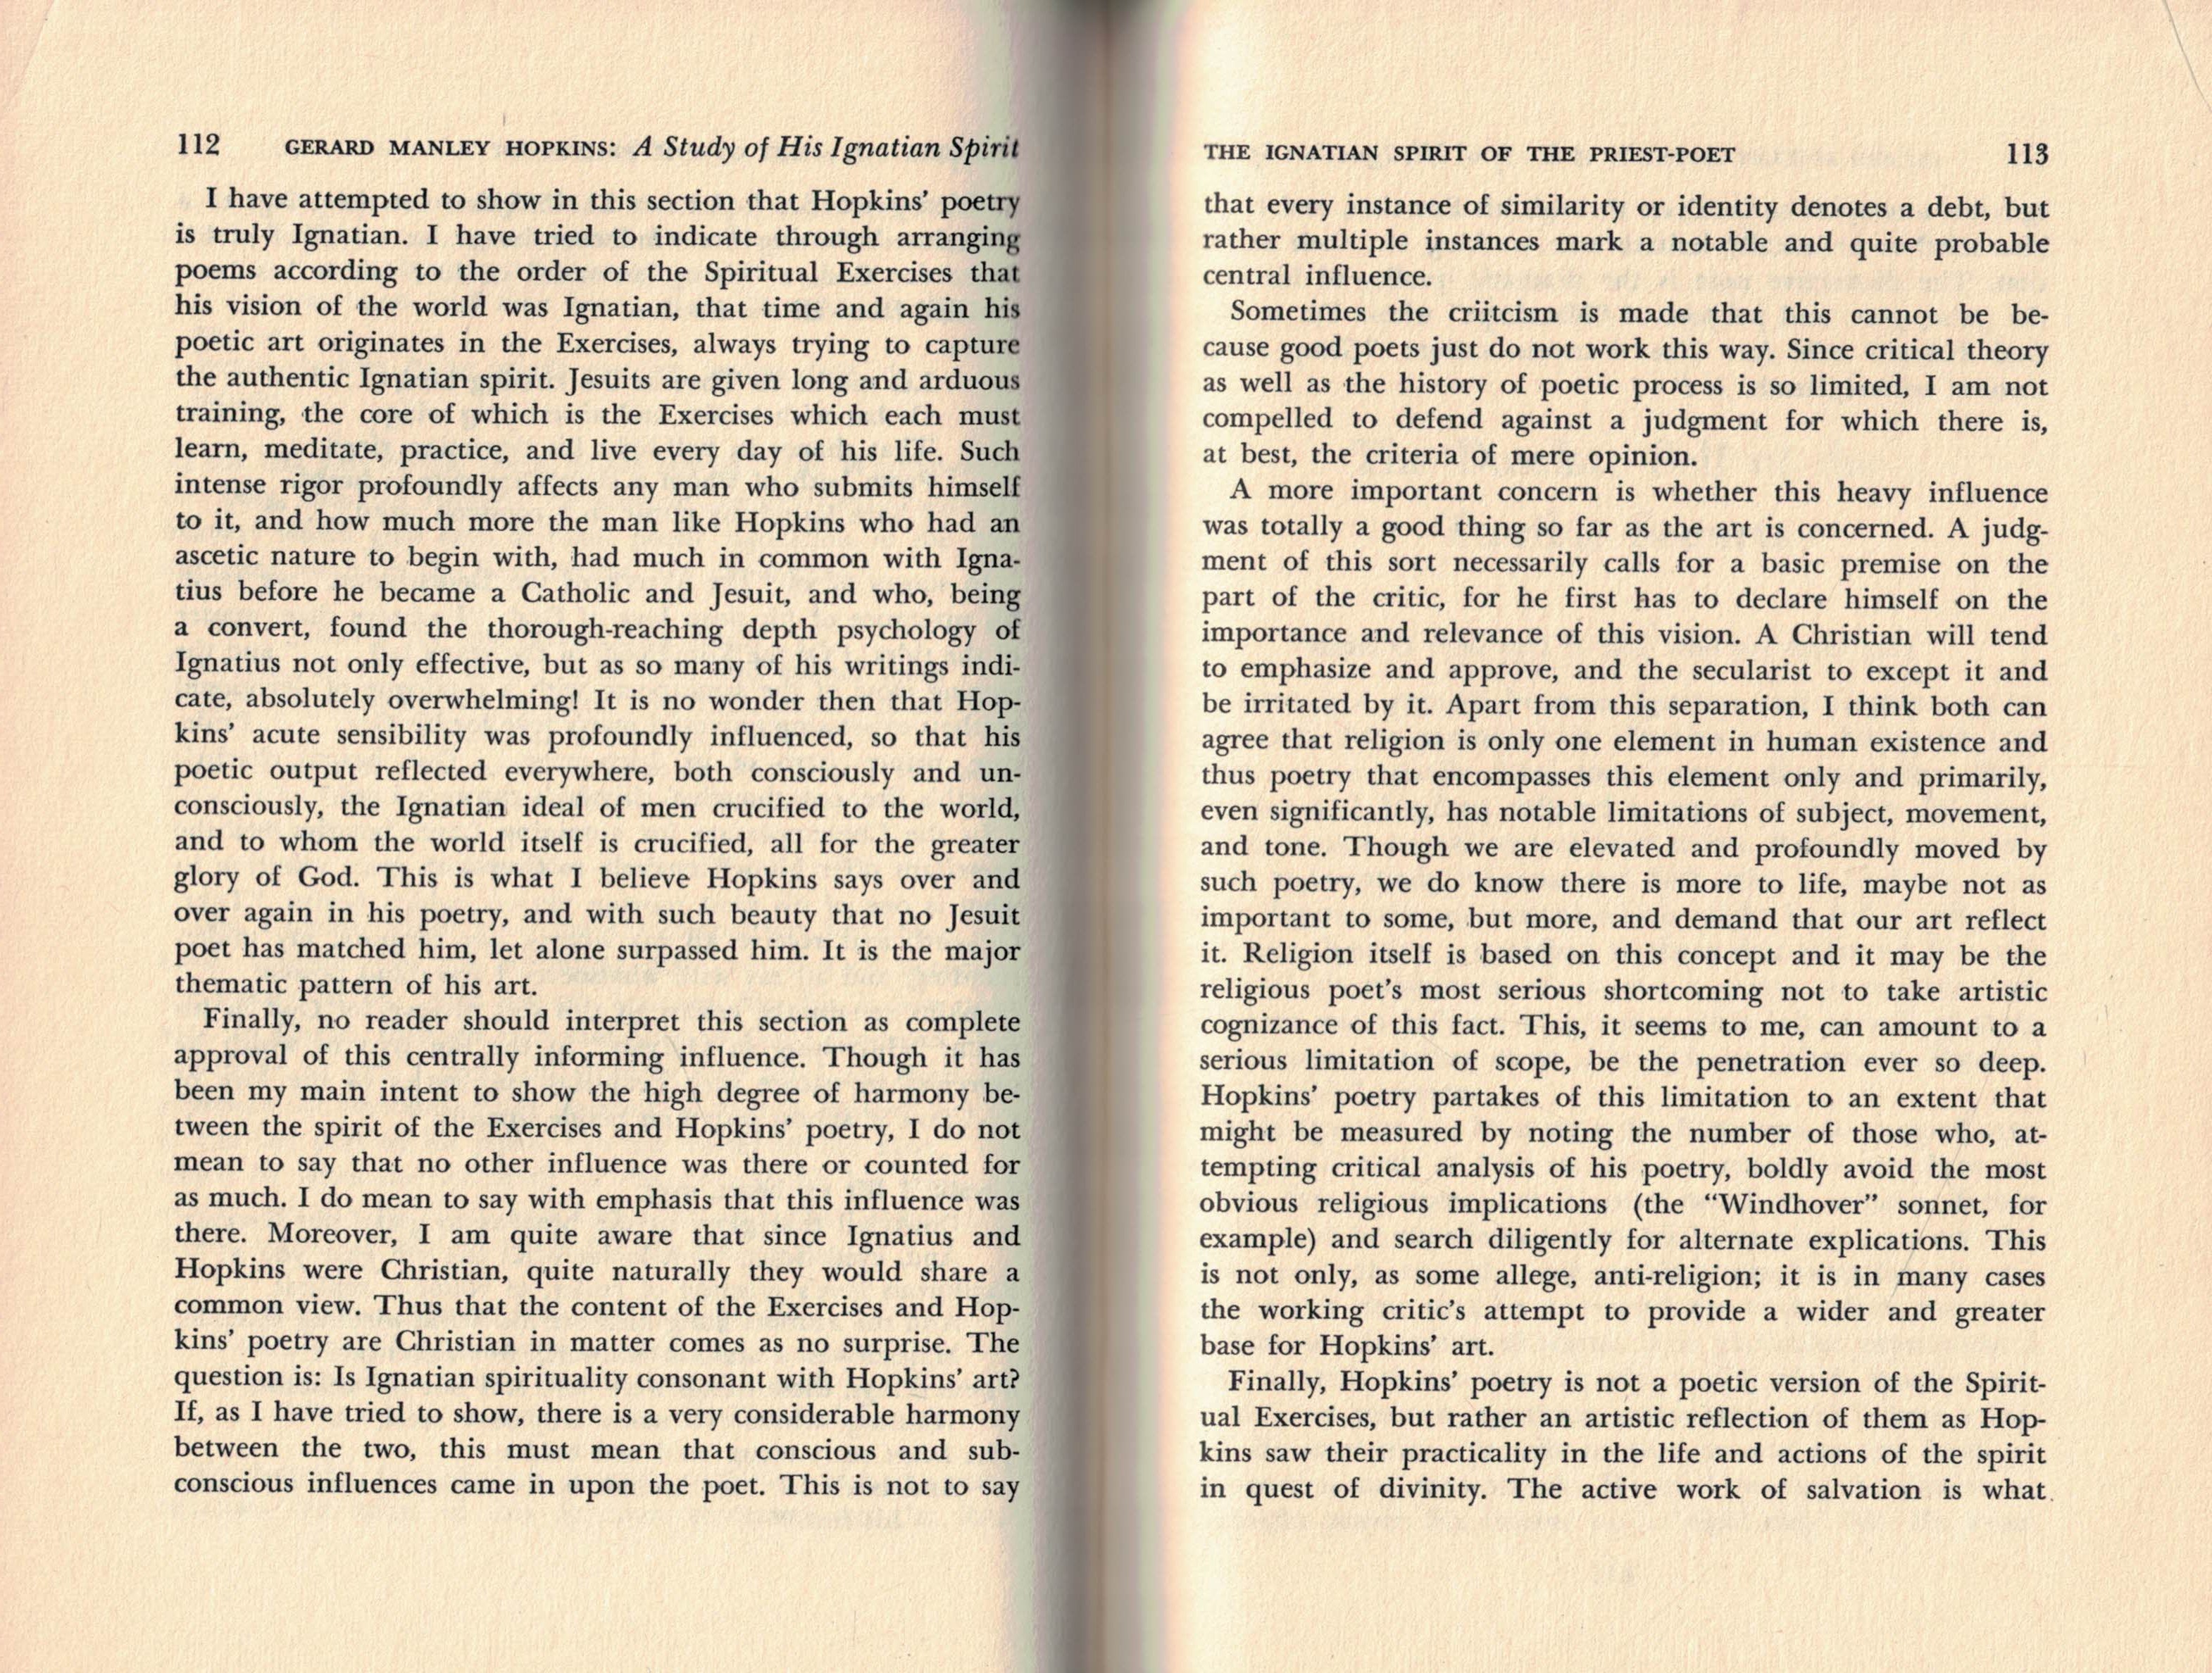 Gerard Manley Hopkins. A Study of His Ignatian Spirit. Signed copy.